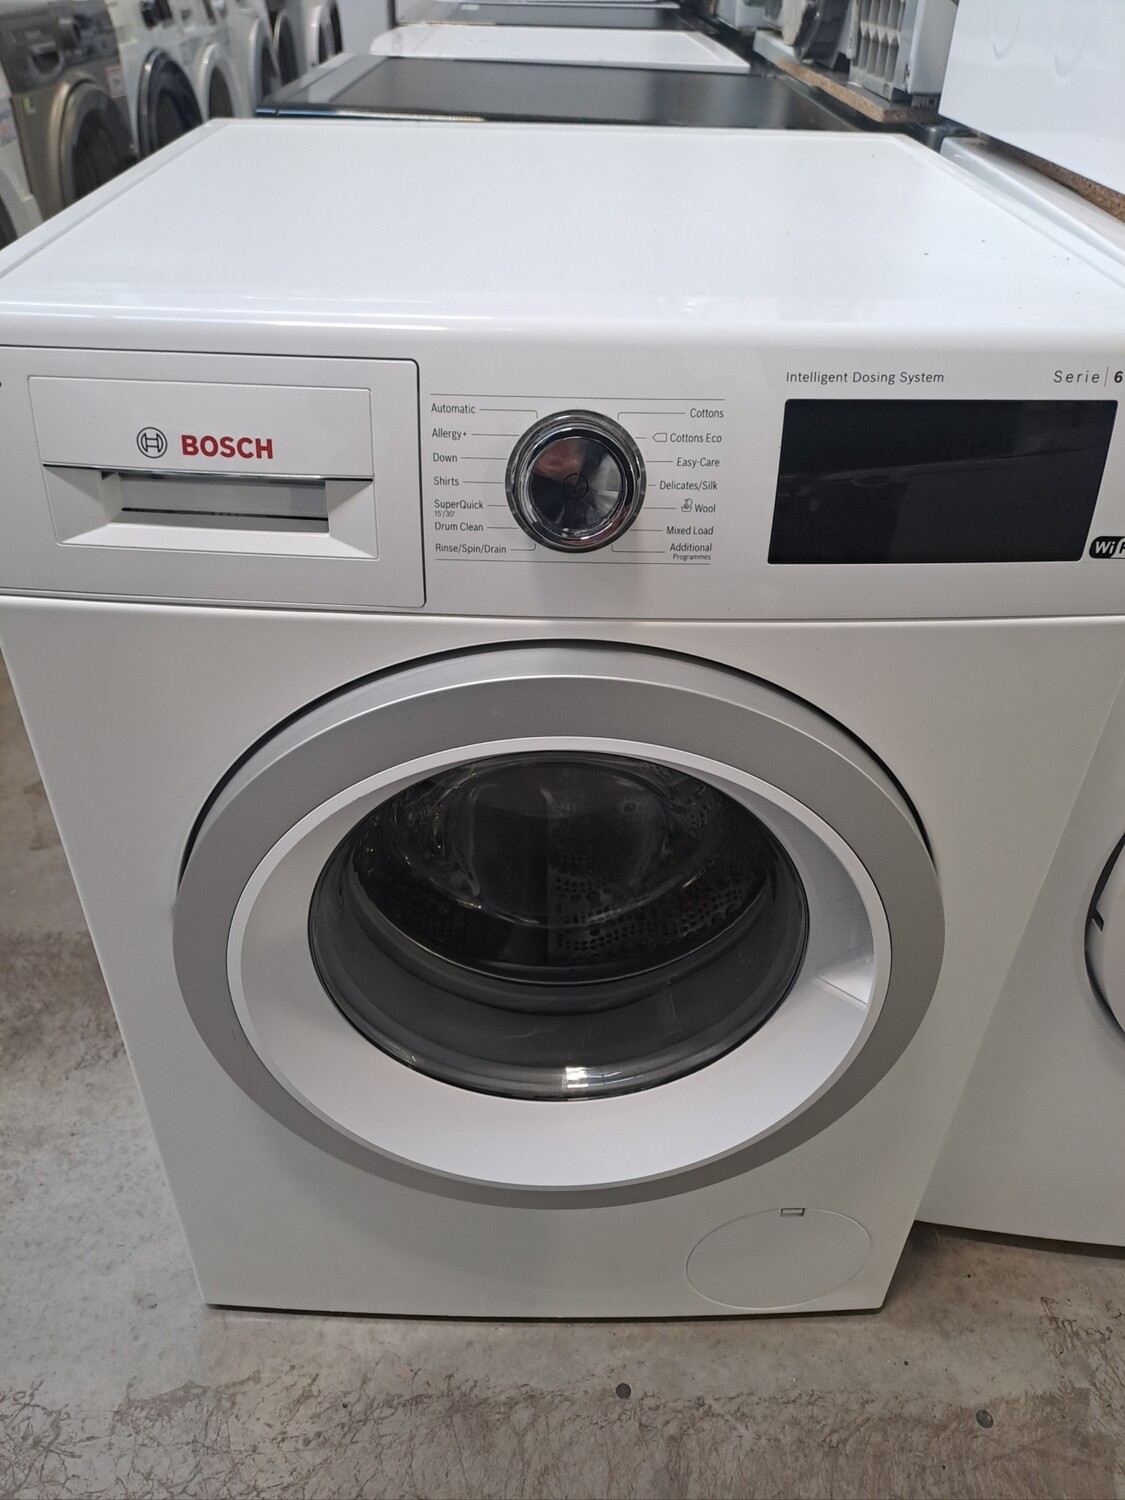 Bosch Serie 6 WAT286H0GB/01 iDOS 9kg Load 1400 Spin Washing Machine - White - Refurbished - 6 Month Guarantee